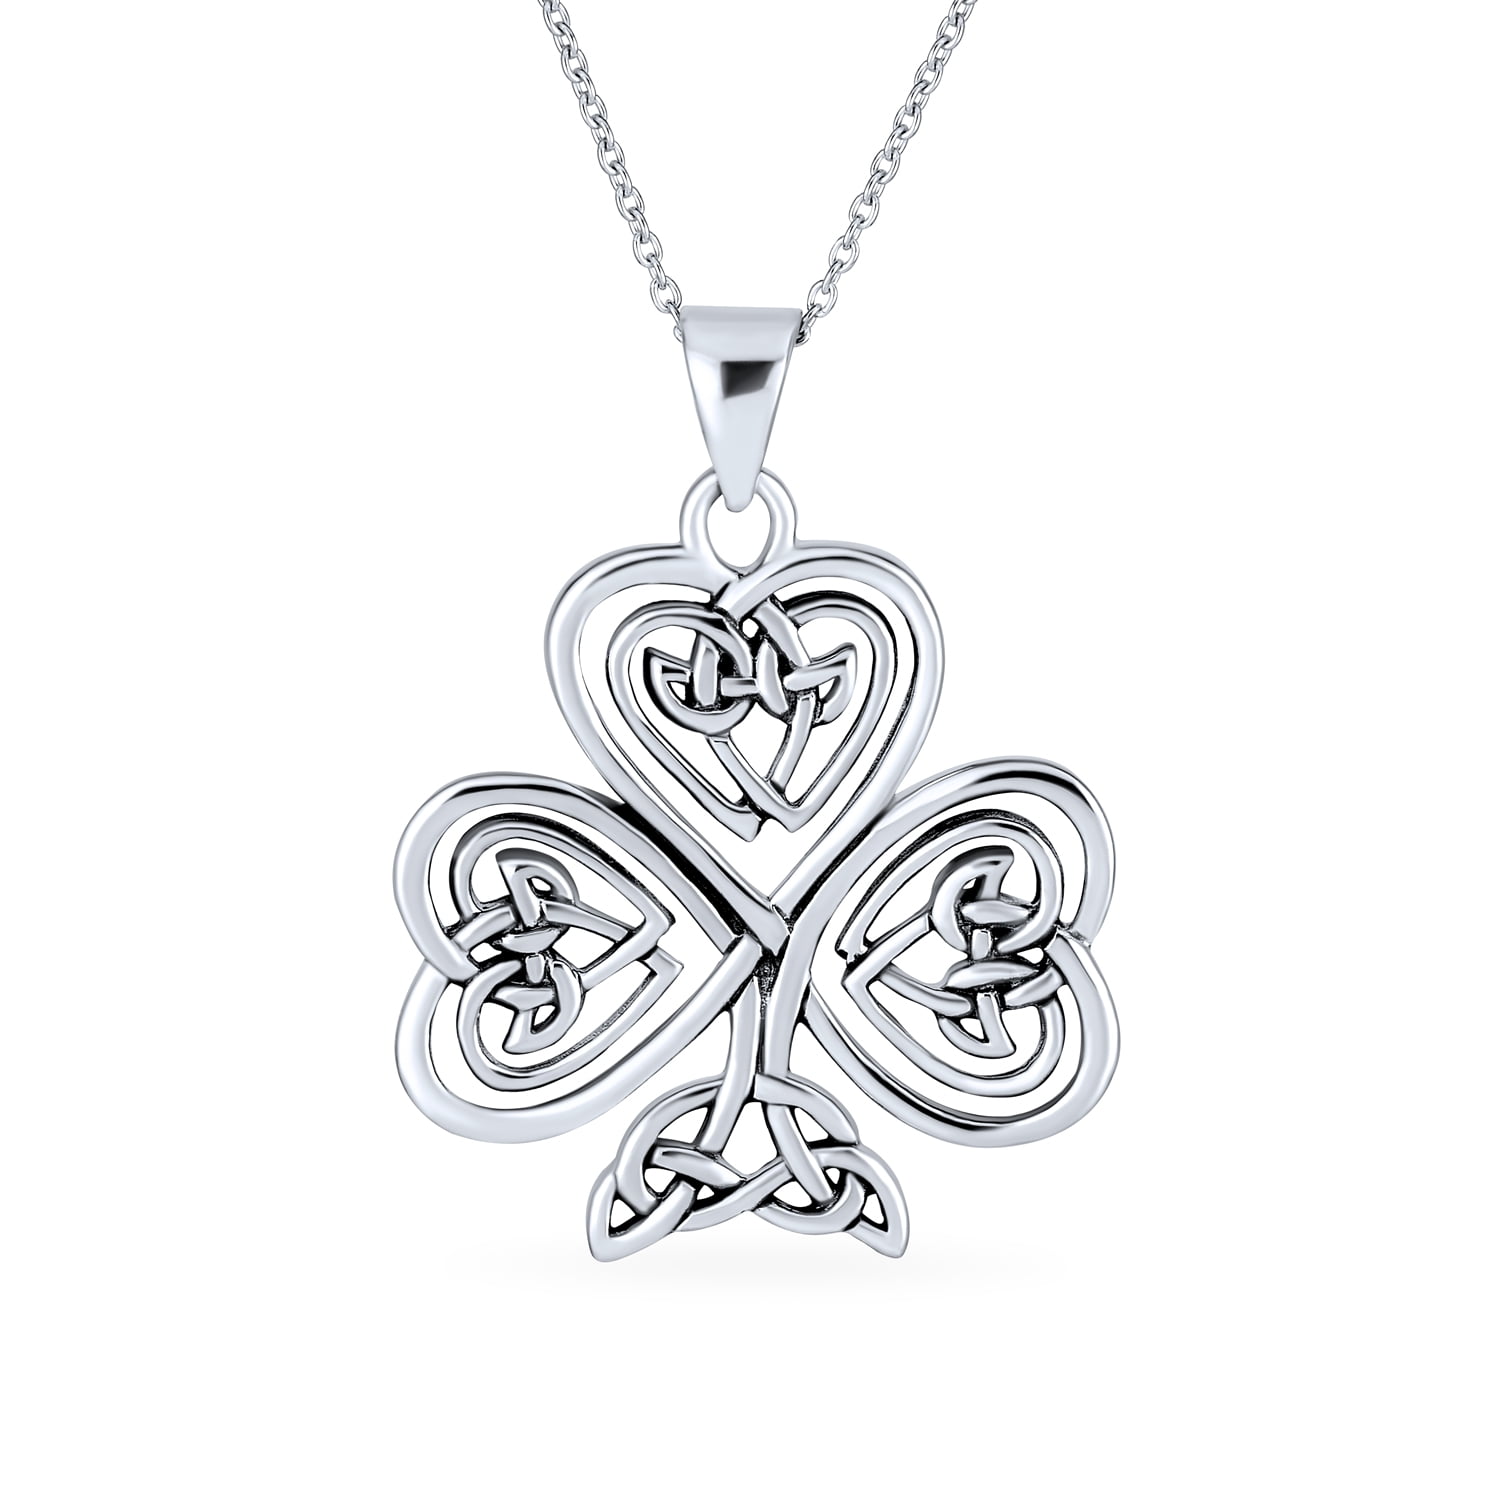 .925 Sterling Silver Irish Shamrock Charm Pendant with Celtic knots 